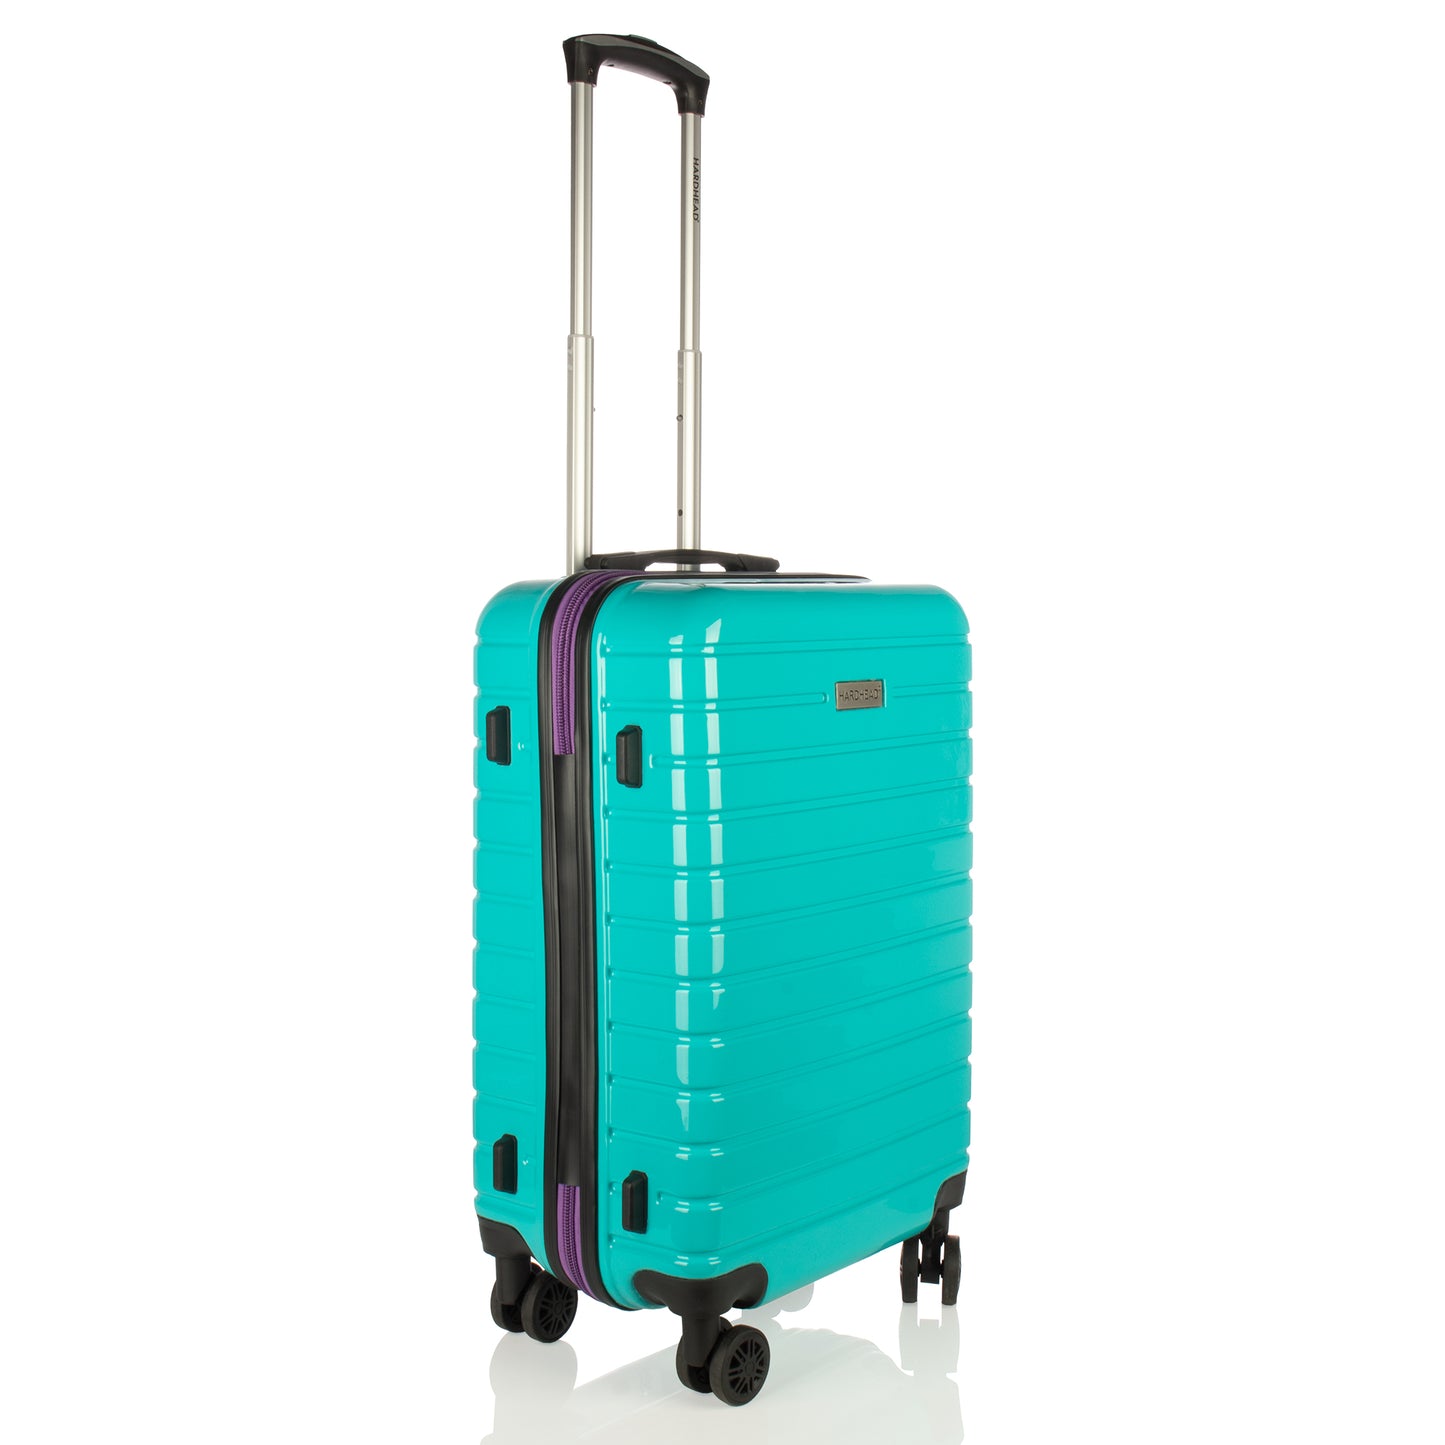 Hardhead Luggage 4 Piece Set (18/20/24/28") Suitcase Lock Spinner Hardshell Blaze Collection Aqua